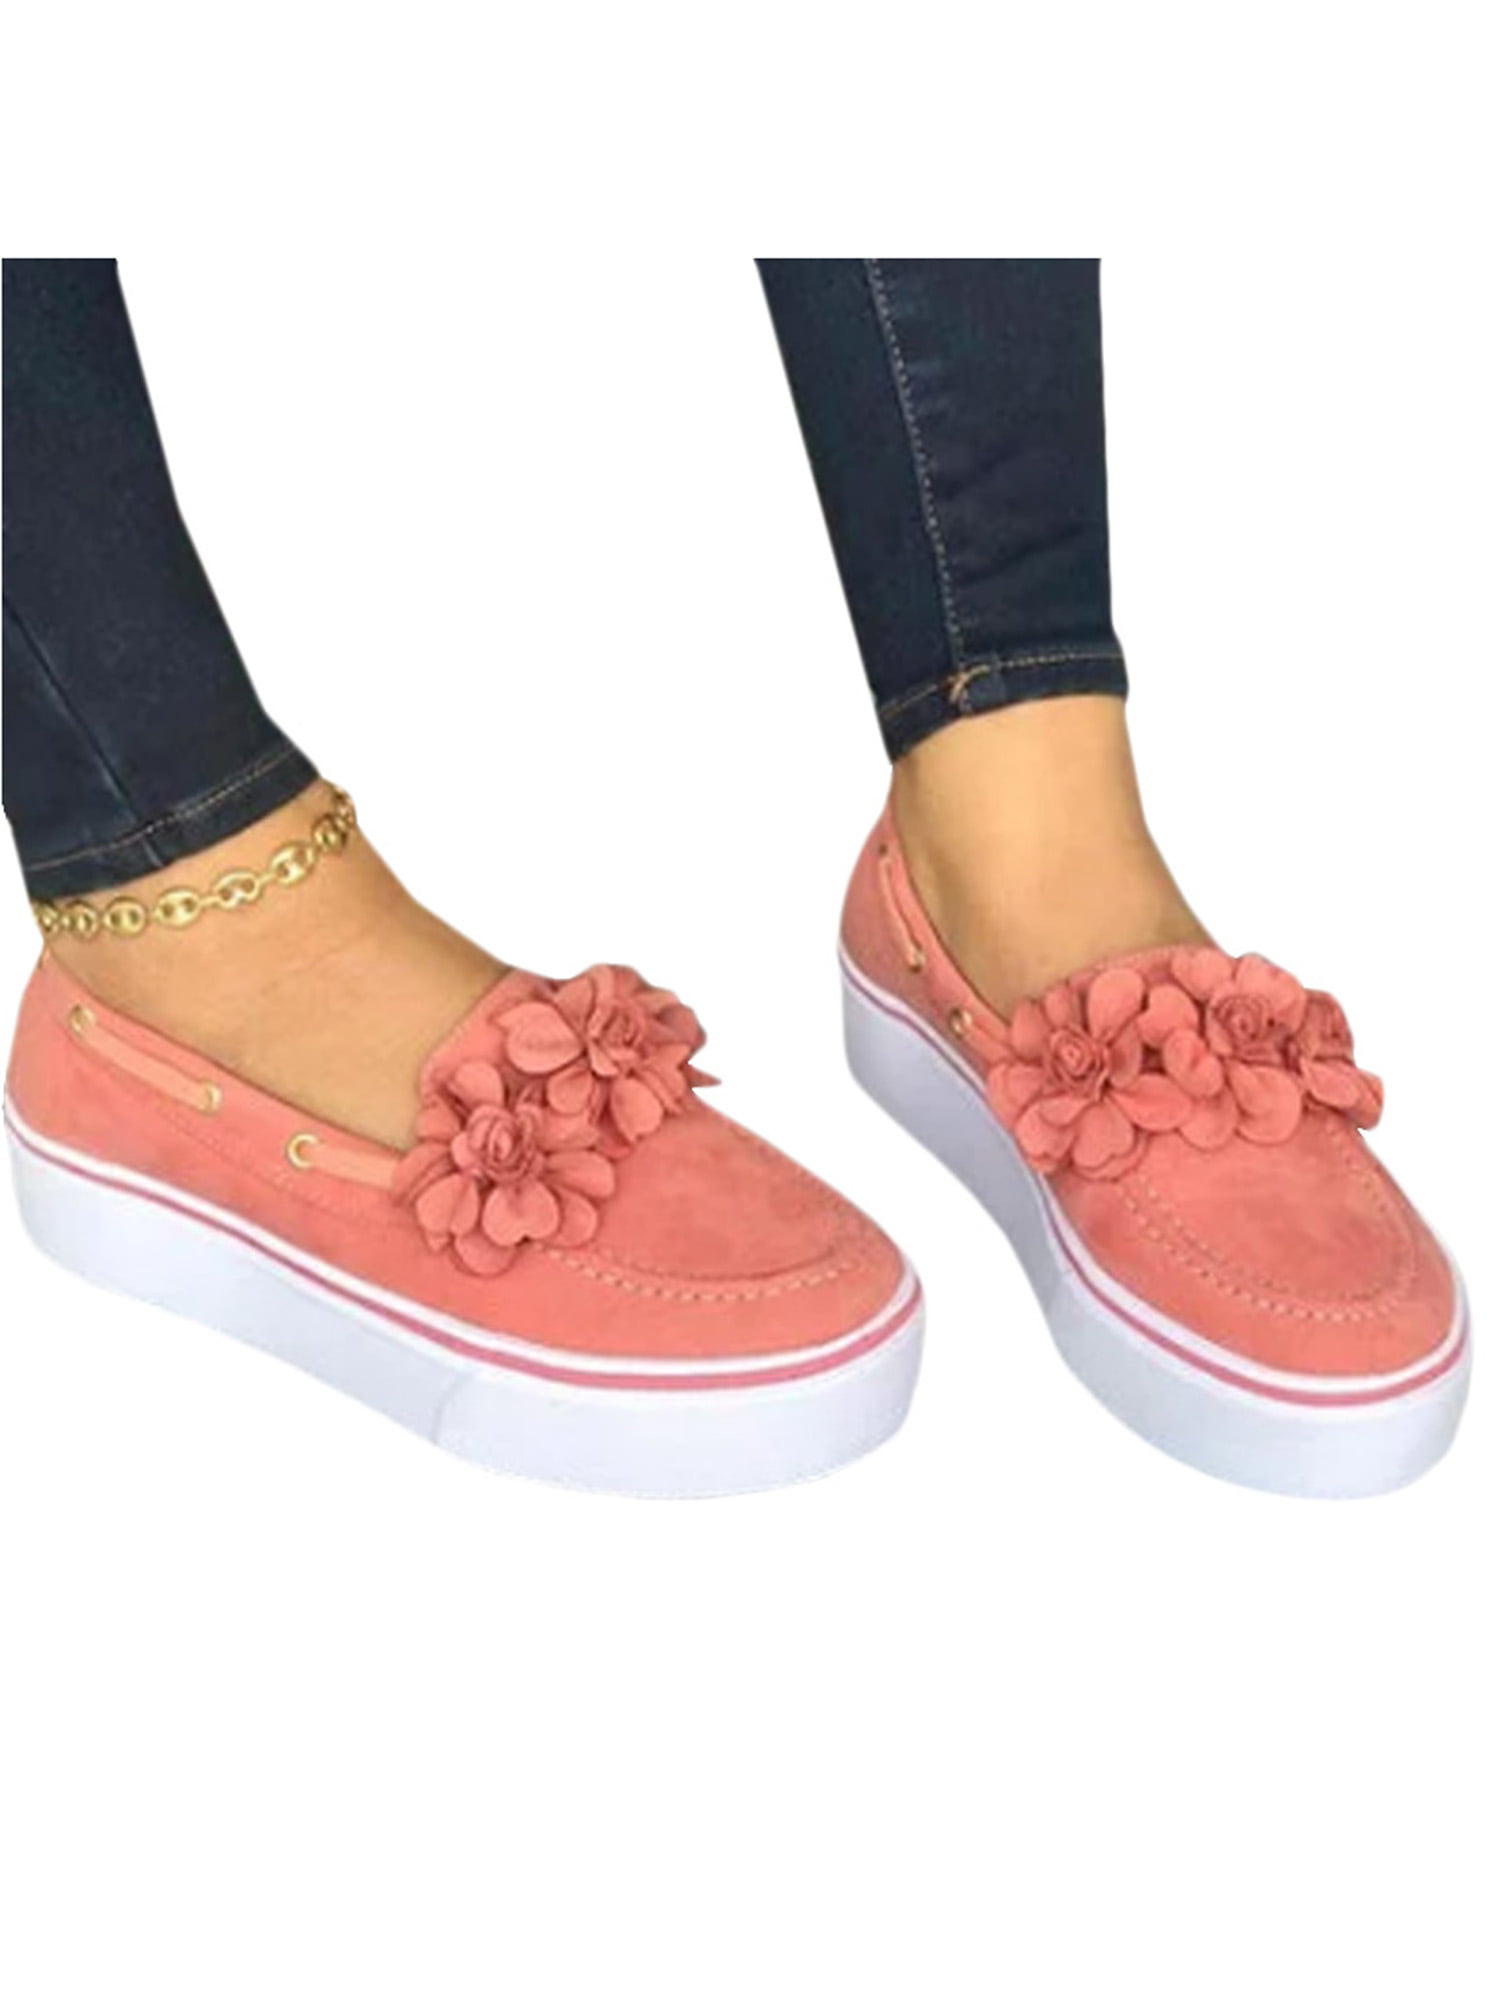 summer slip on shoes womens